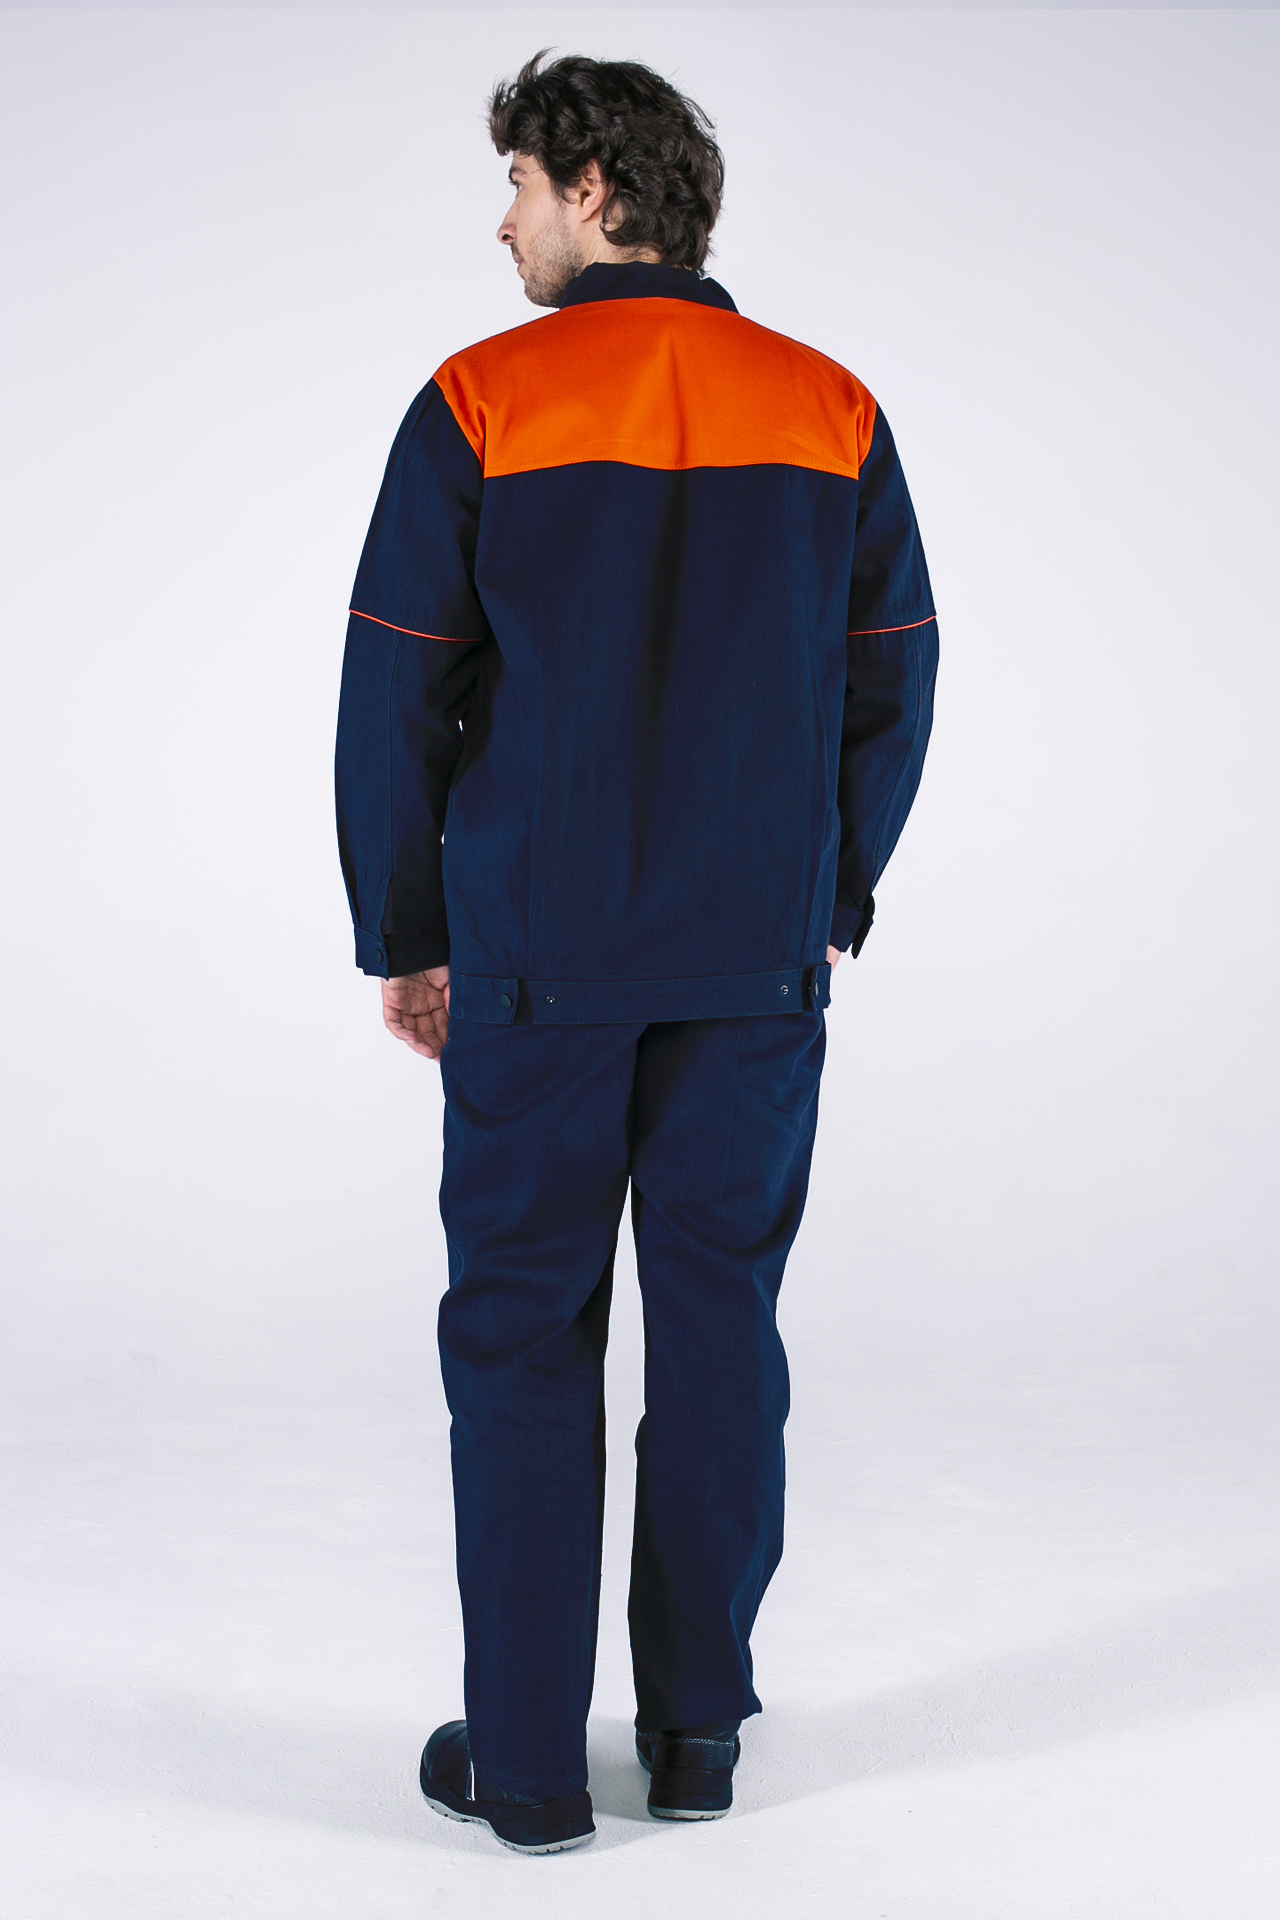 Костюм Союз (тк.Саржа,230) брюки, т.синий/оранжевый